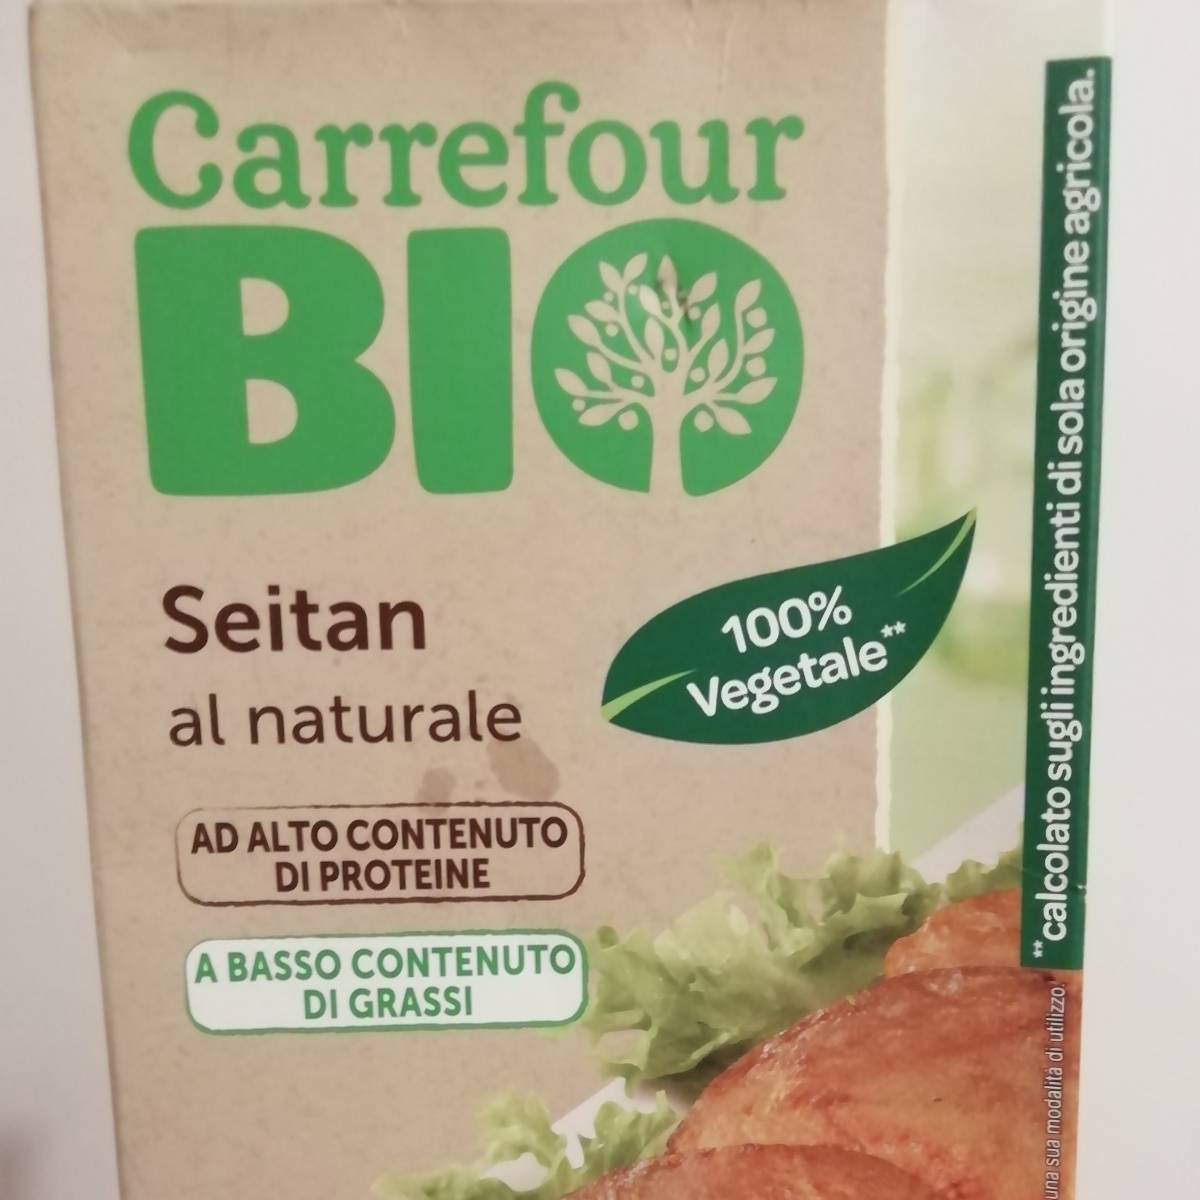 Carrefour Bio Seitan al naturale Reviews | abillion